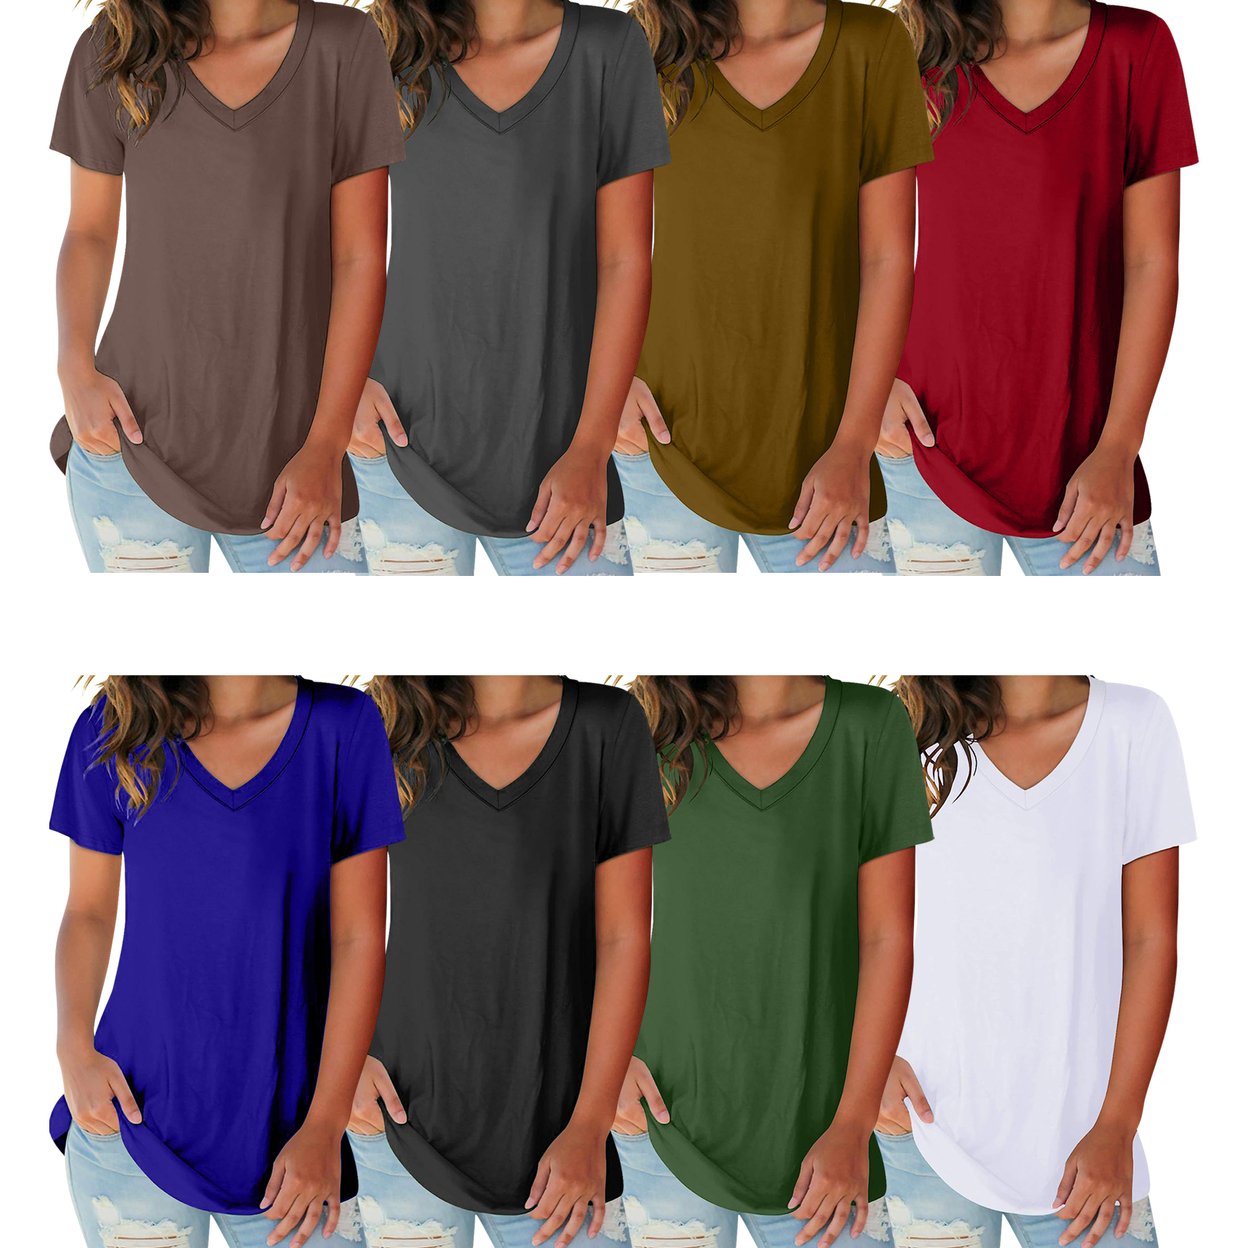 6-Pack: Women's Ultra Soft Smooth Cotton Blend Basic V-Neck Short Sleeve Shirts - Xx-large